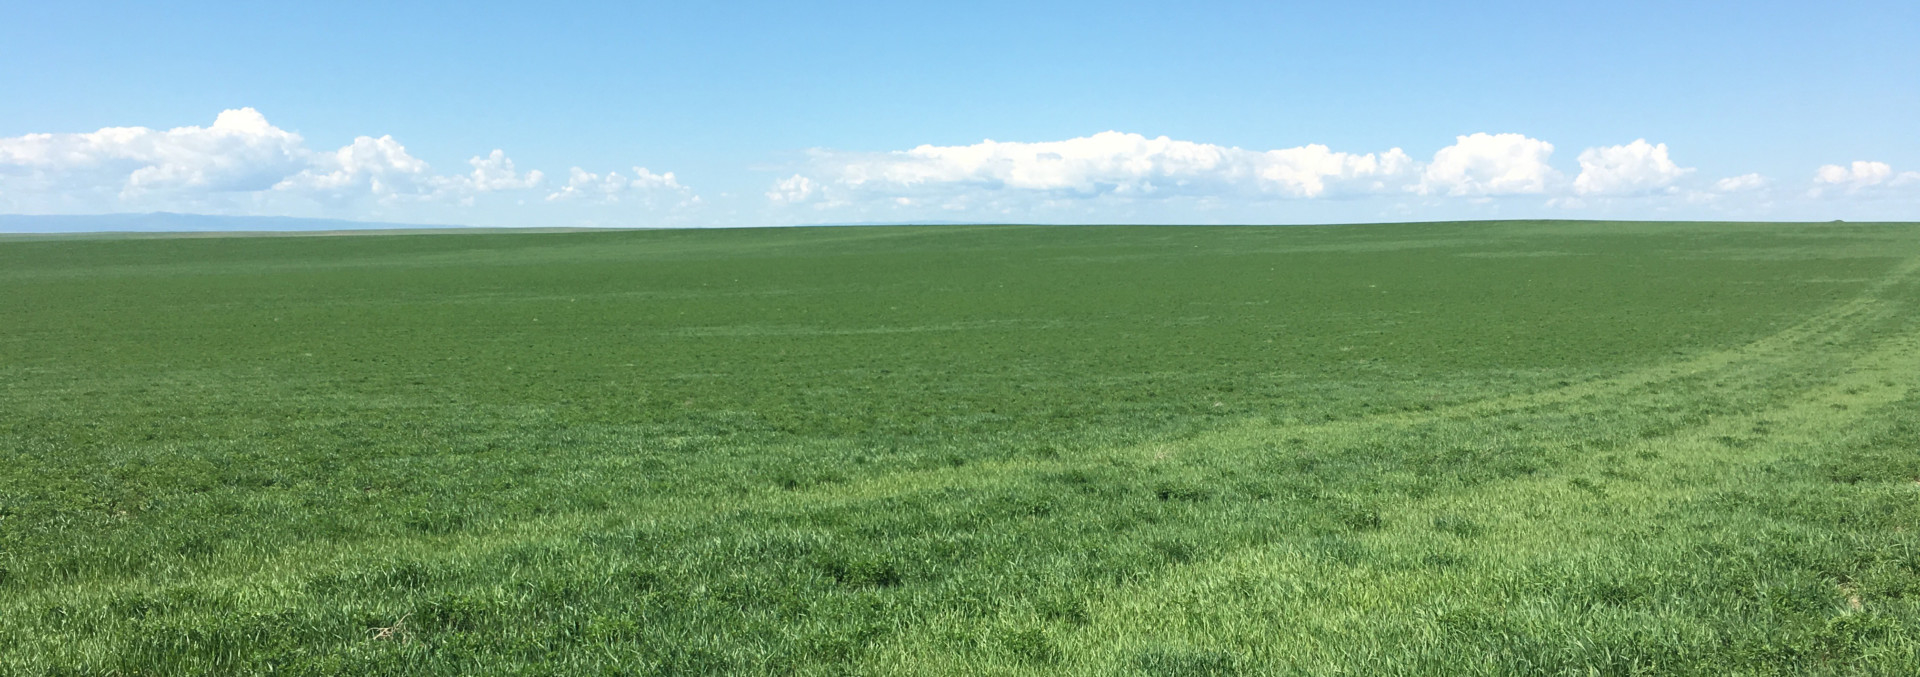 south dakota property for sale northern plains ranch